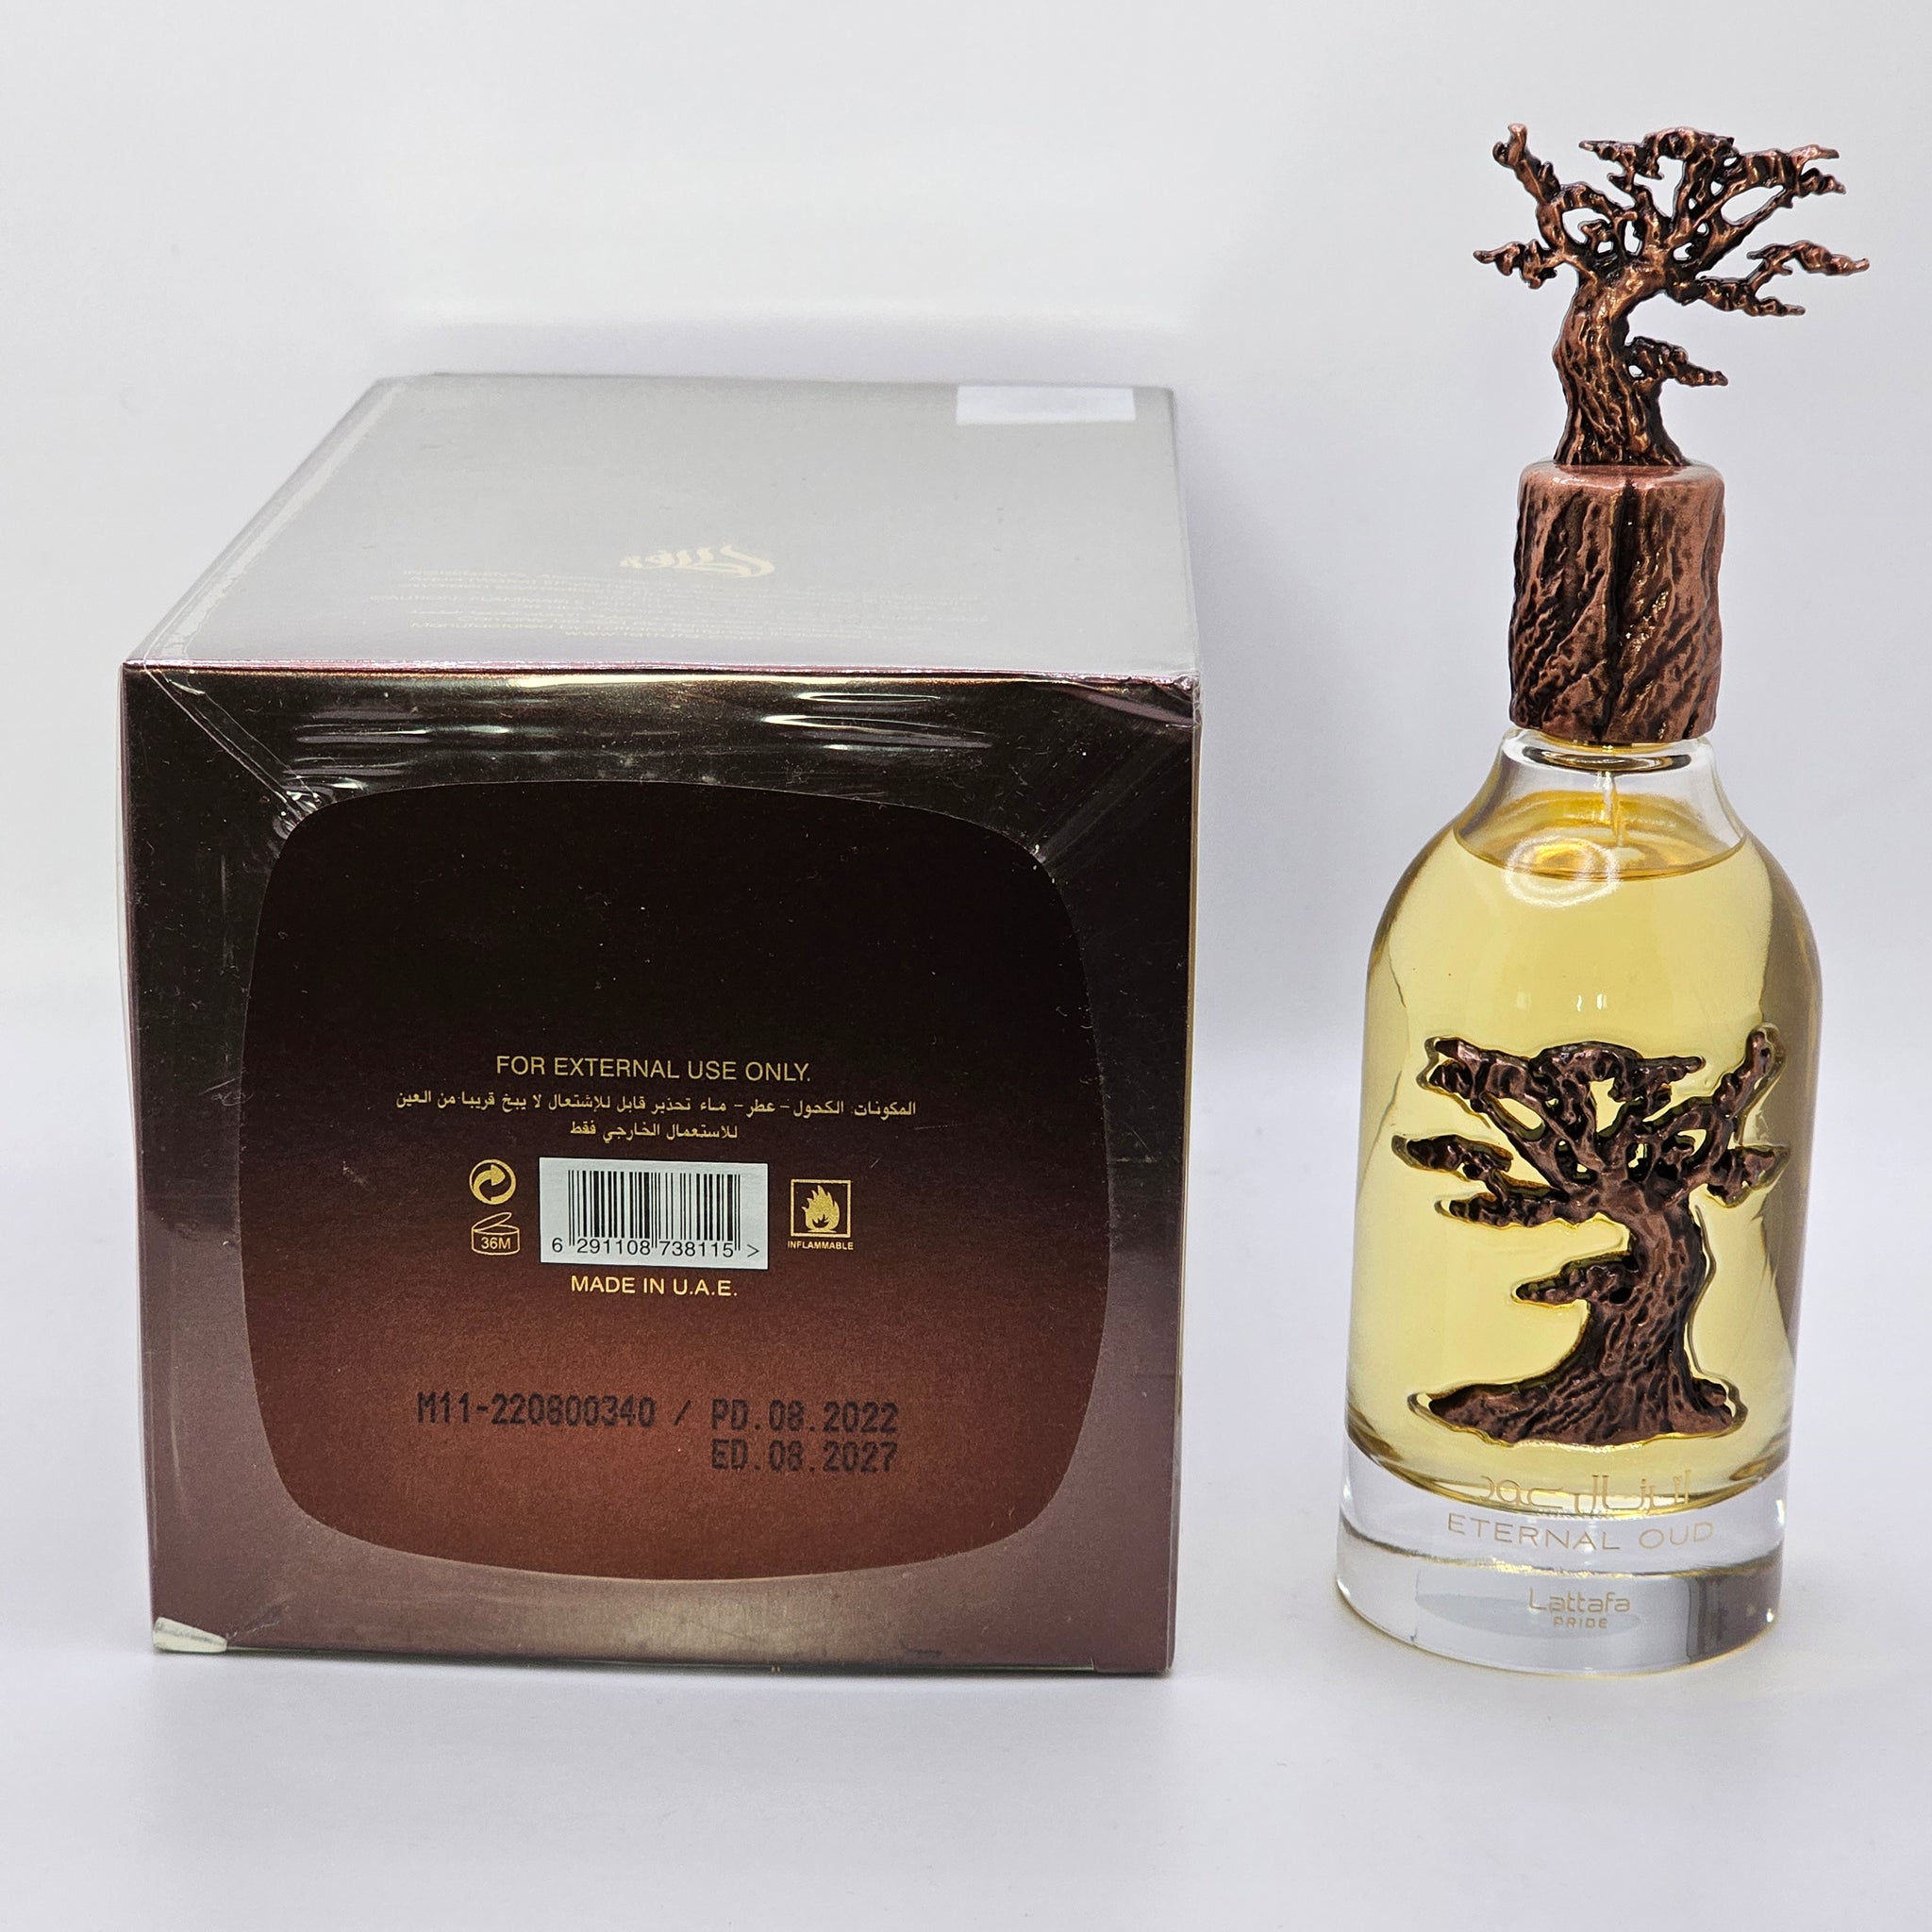 Eternal Oud Eau De Parfum 3.4 Oz - Unisex Fragrance by Lattafa: Timeless Elegance for All